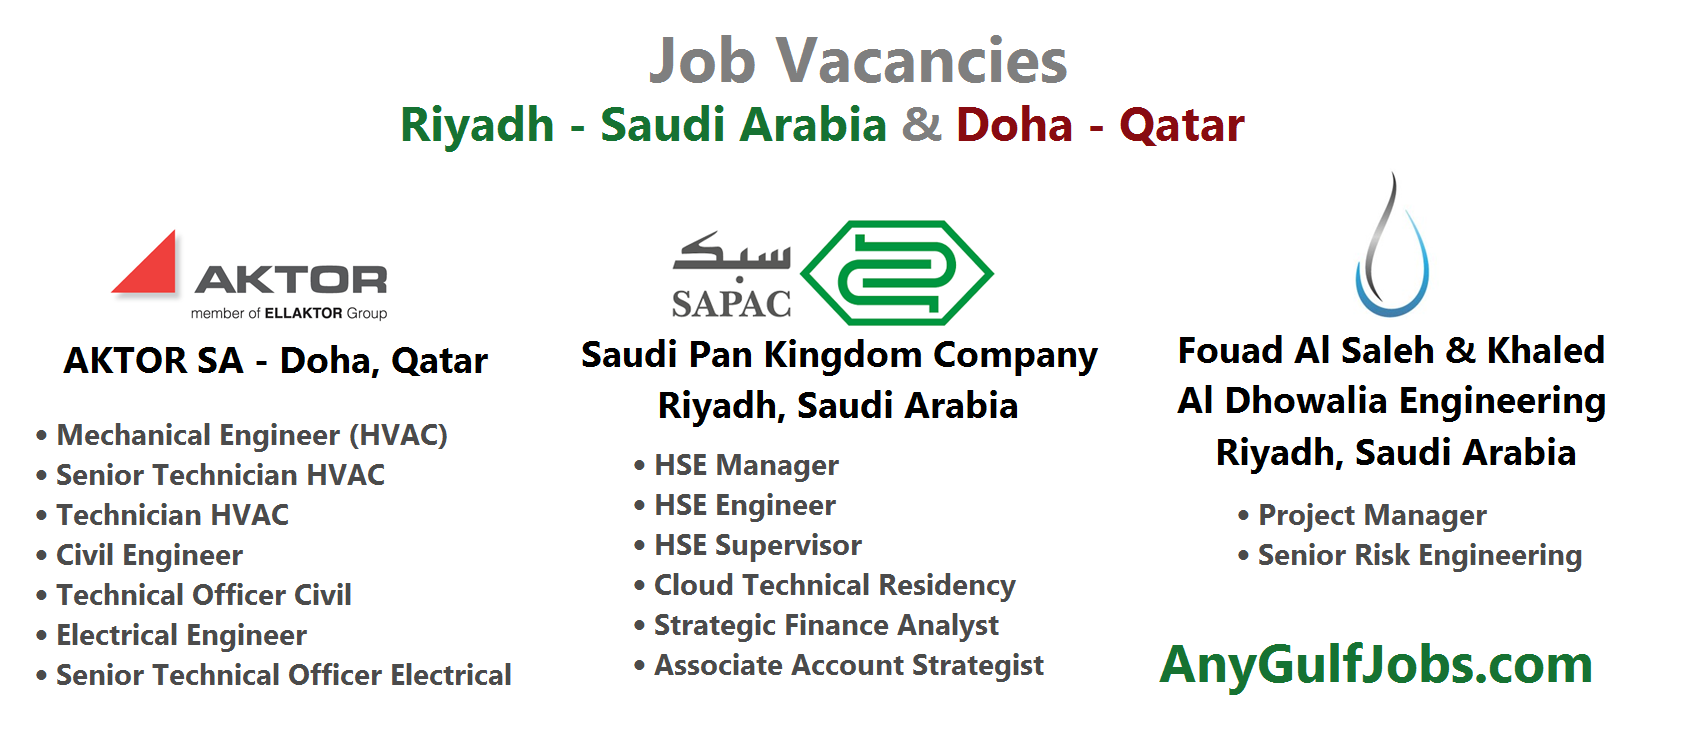 Fouad Al Saleh & Khaled Al Dhowalia Engineering Job Vacancies - Riyadh, Saudi Arabia - KSA